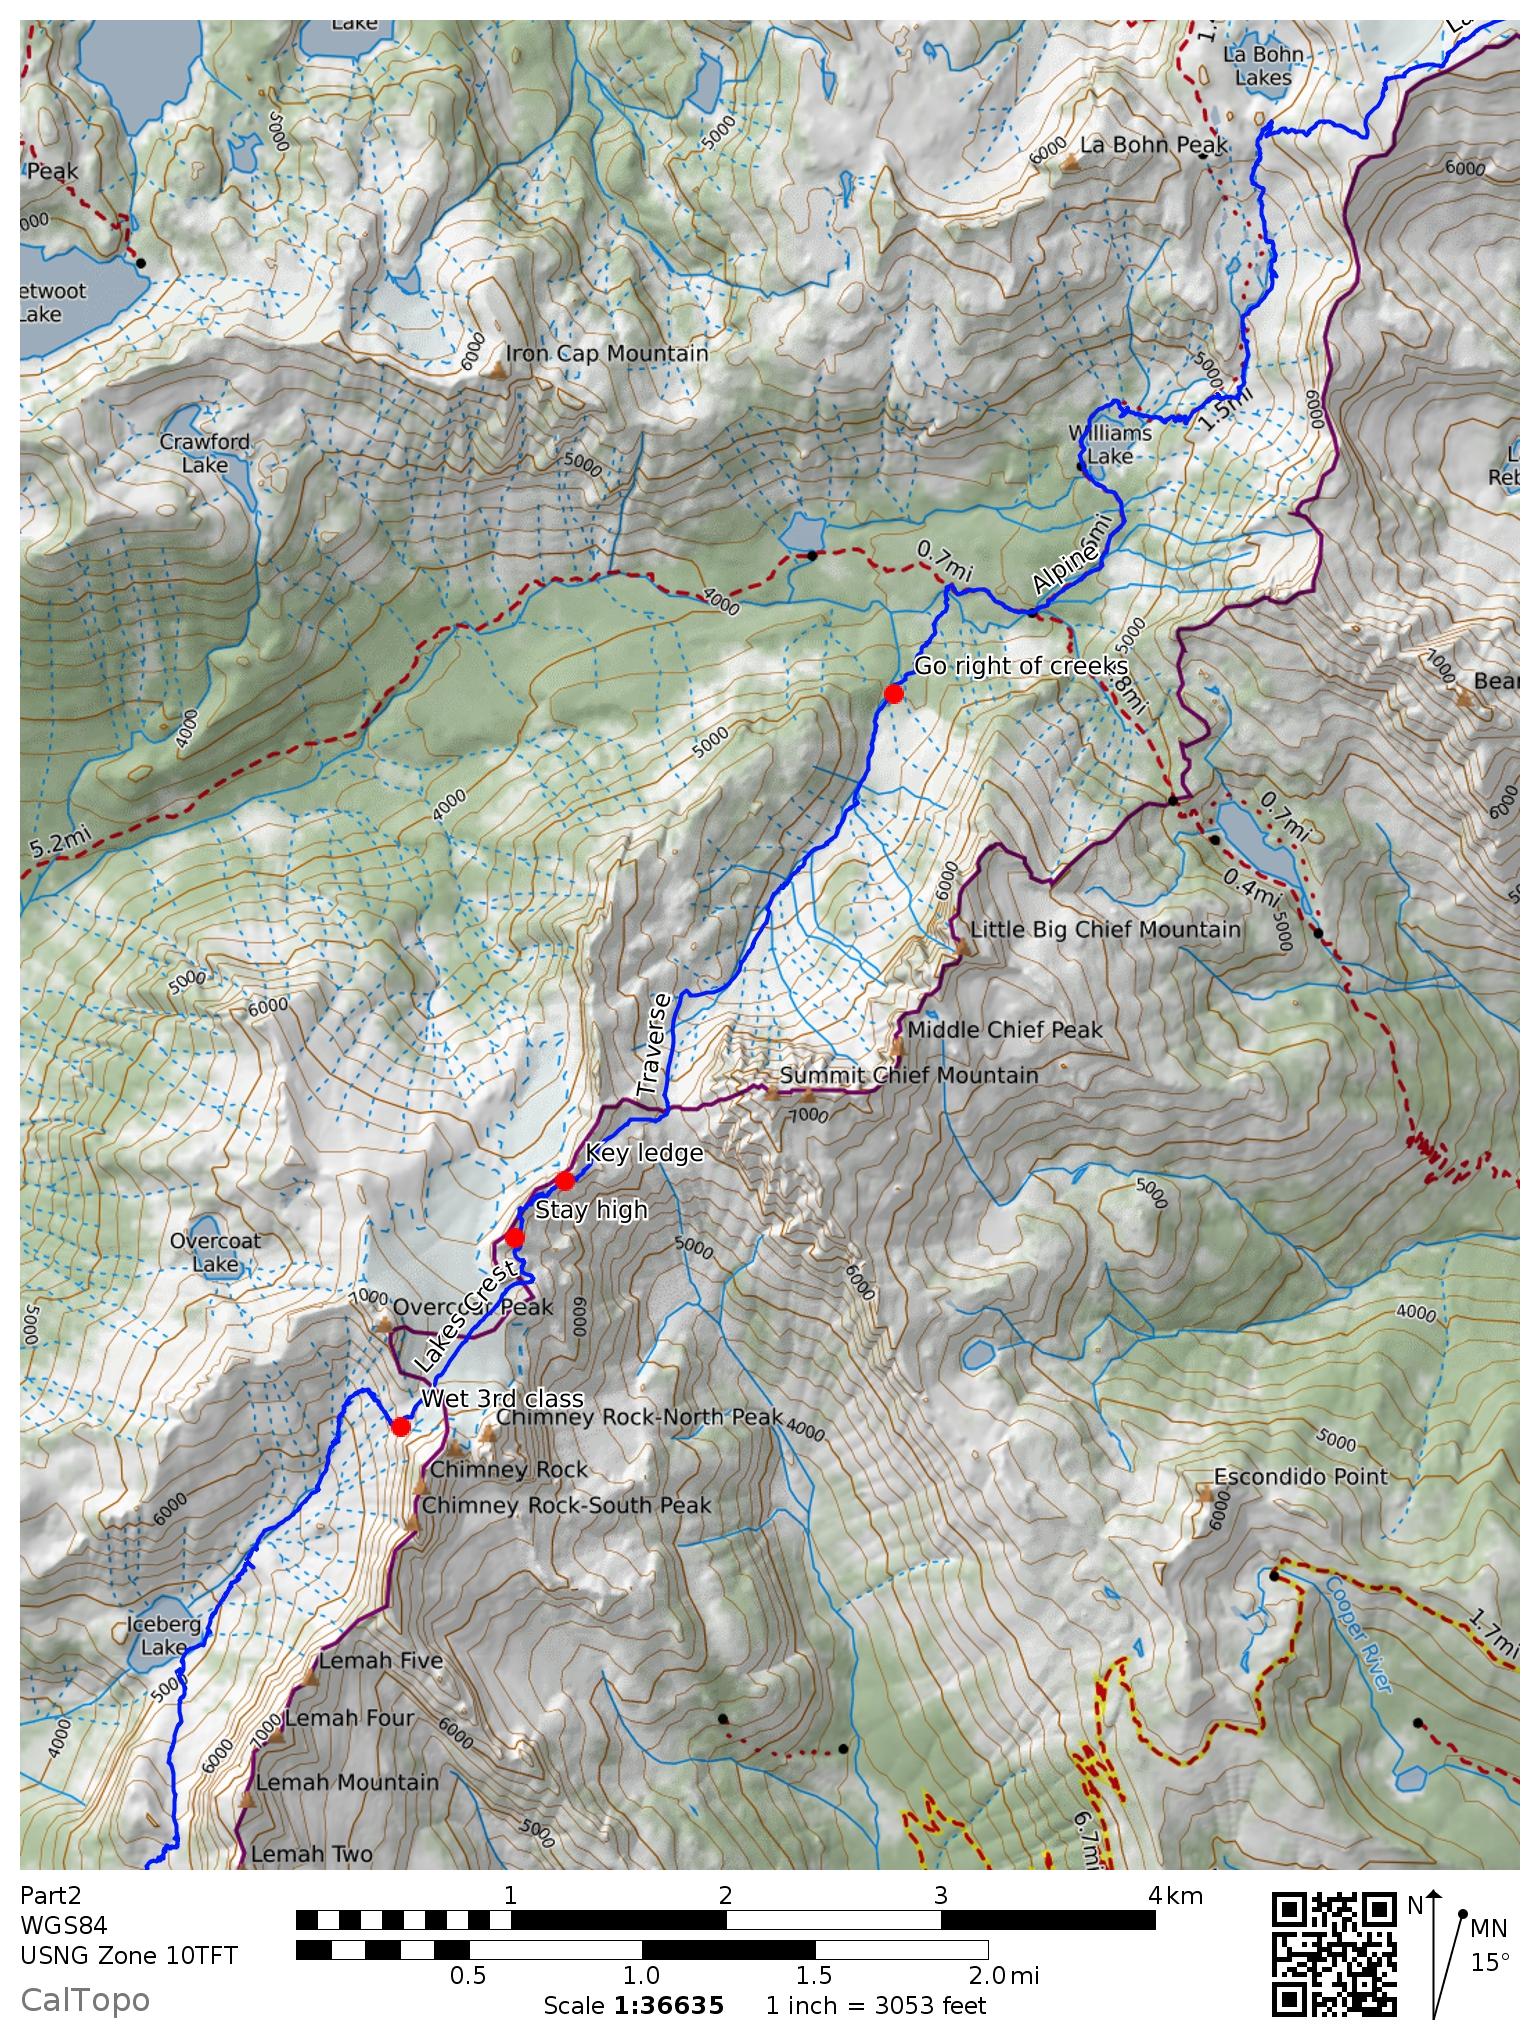 [TR] Alpine Lakes Wilderness - Mt. Daniel via Snoqualmie Pass (The